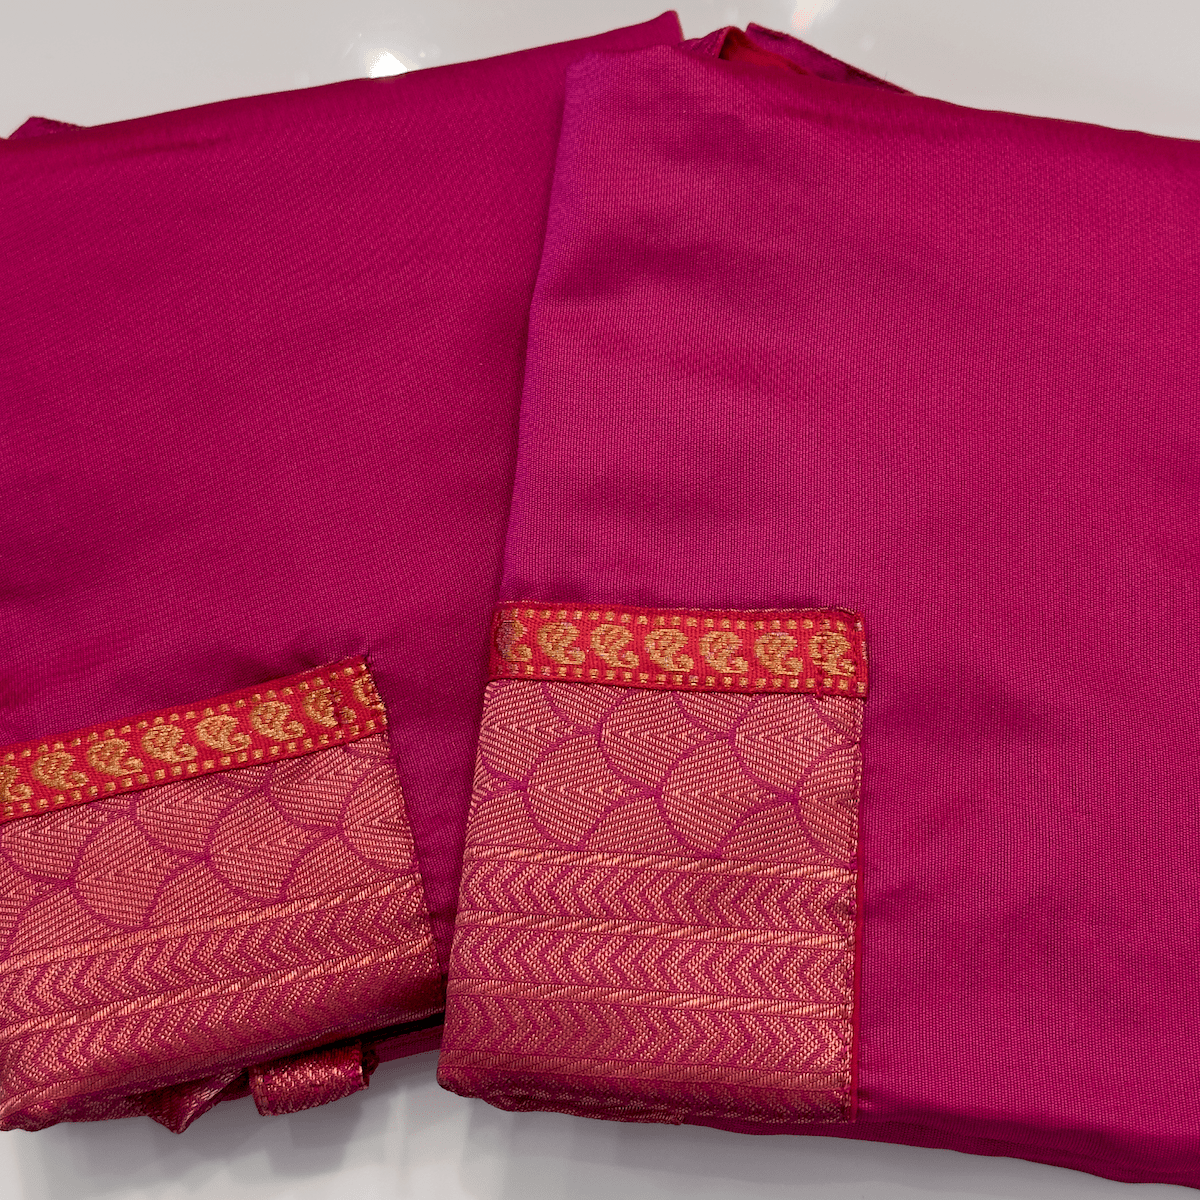 Cool & Casual Handmade Sari Aprons-Teal Floral with Gold Trim #2-Magic Hour